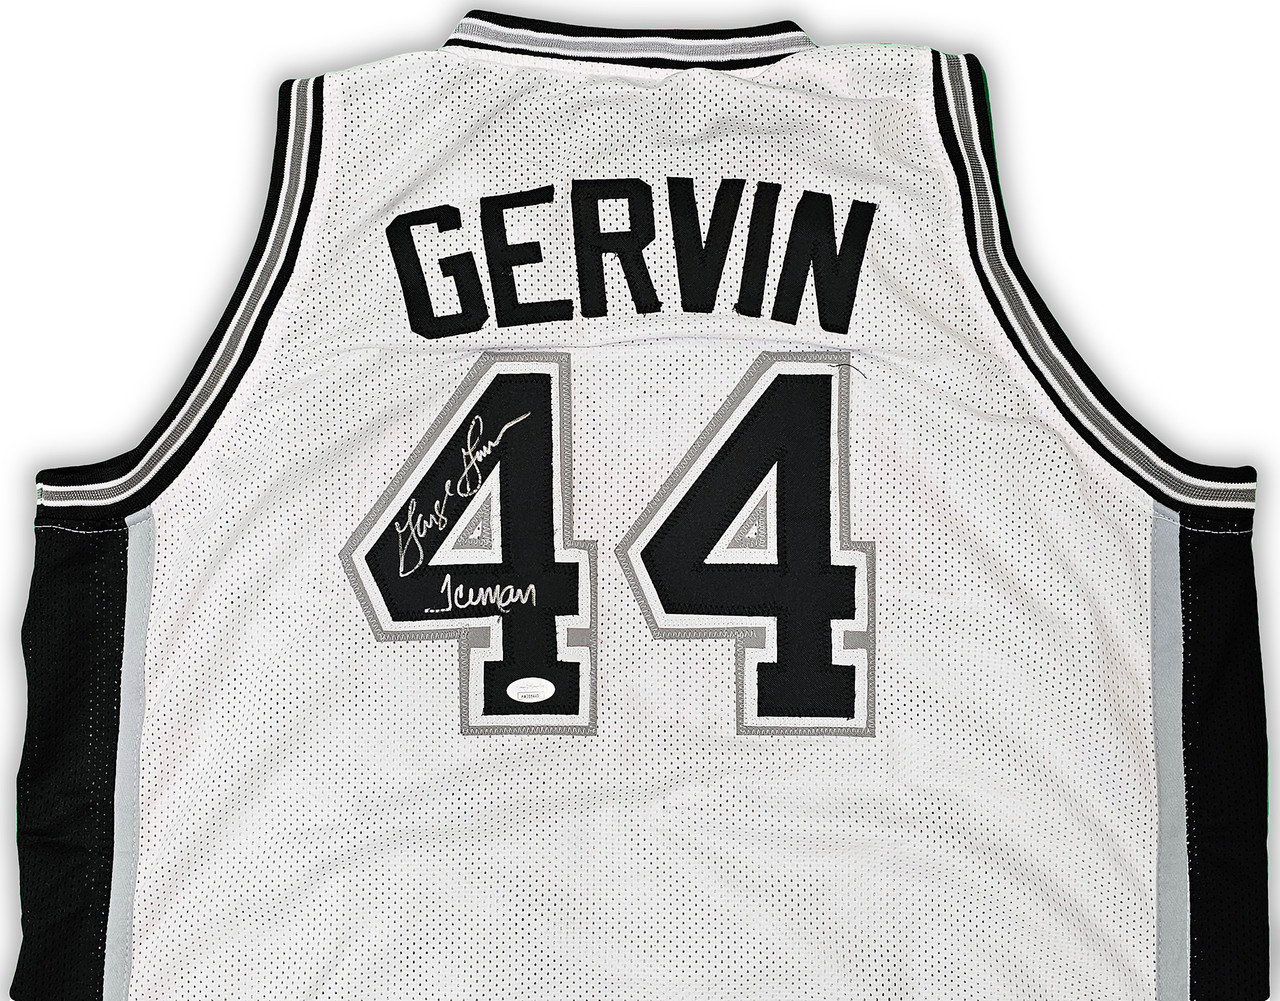 George Gervin Signed San Antonio Spurs Photo Jersey Inscribed HOF 96 –